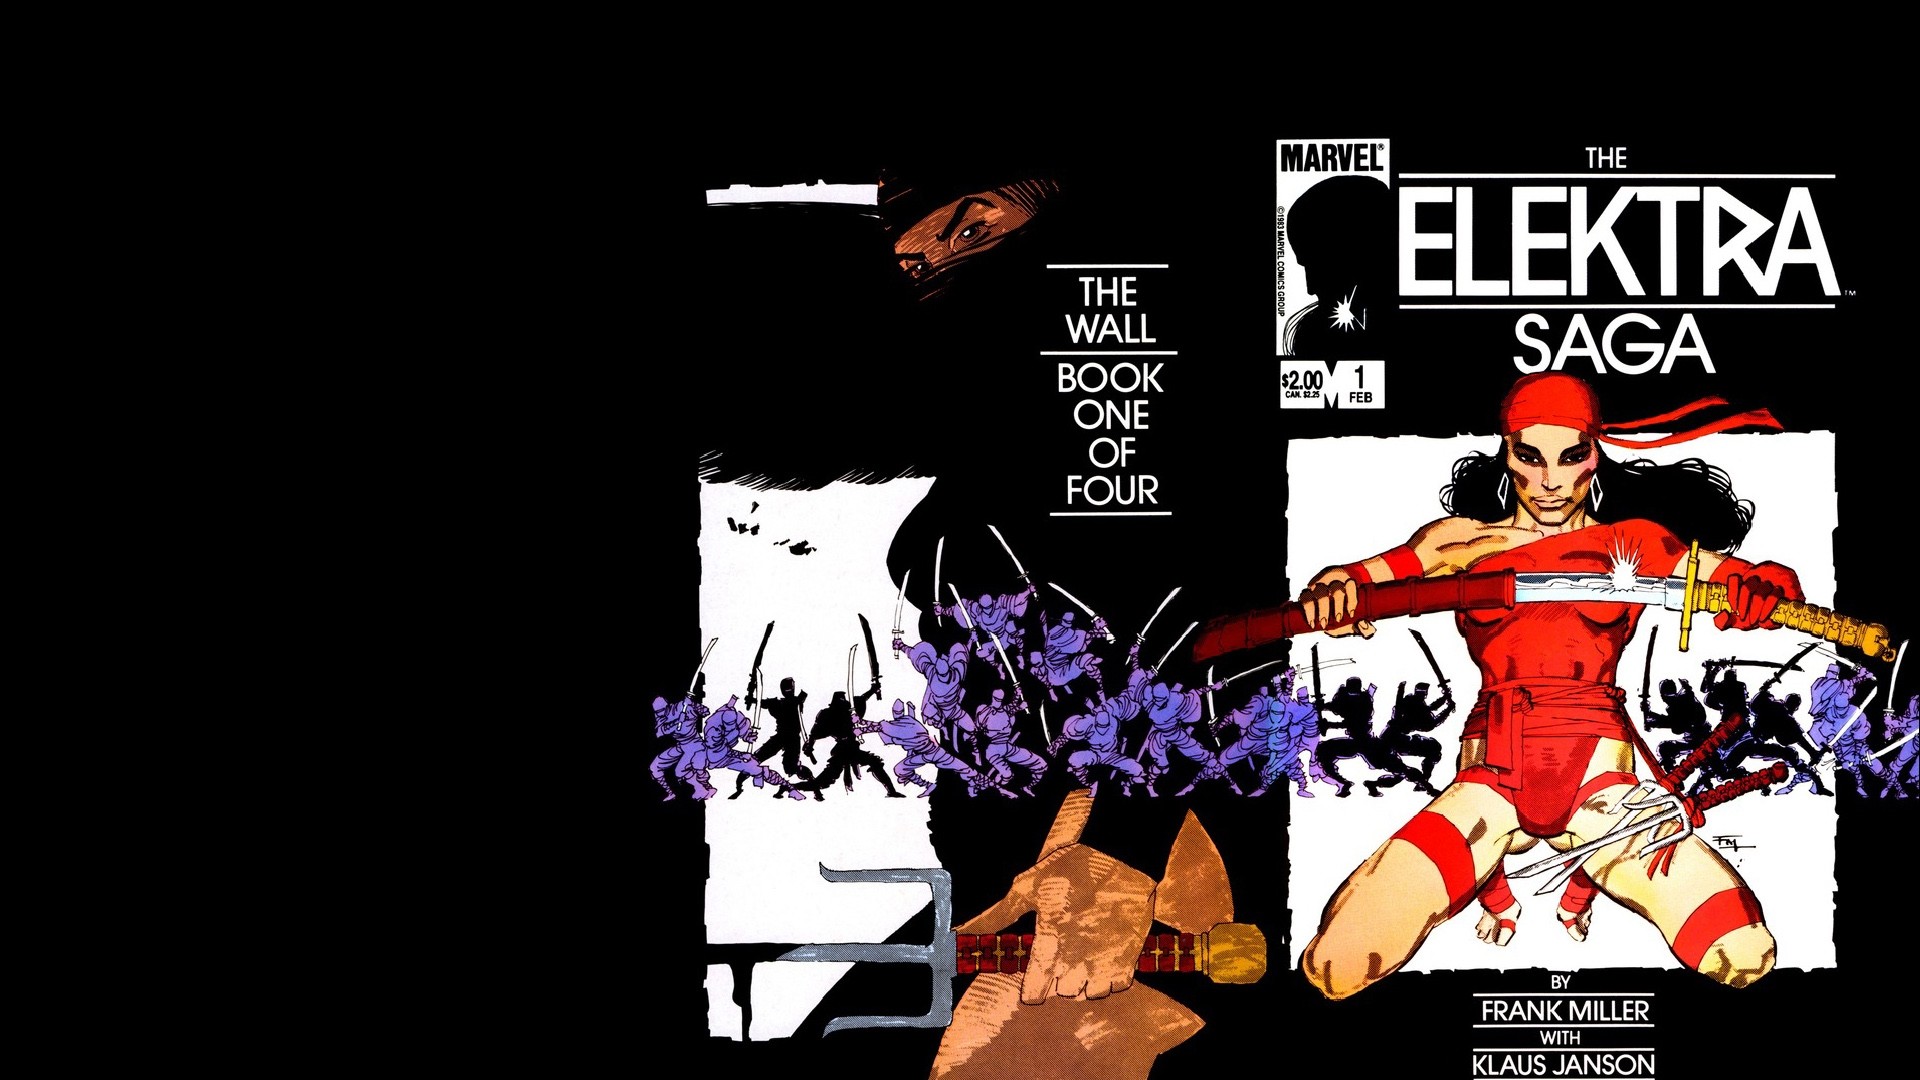 1920x1080 Filename: The-Elektra-Saga-Comic-Wallpapers.jpg